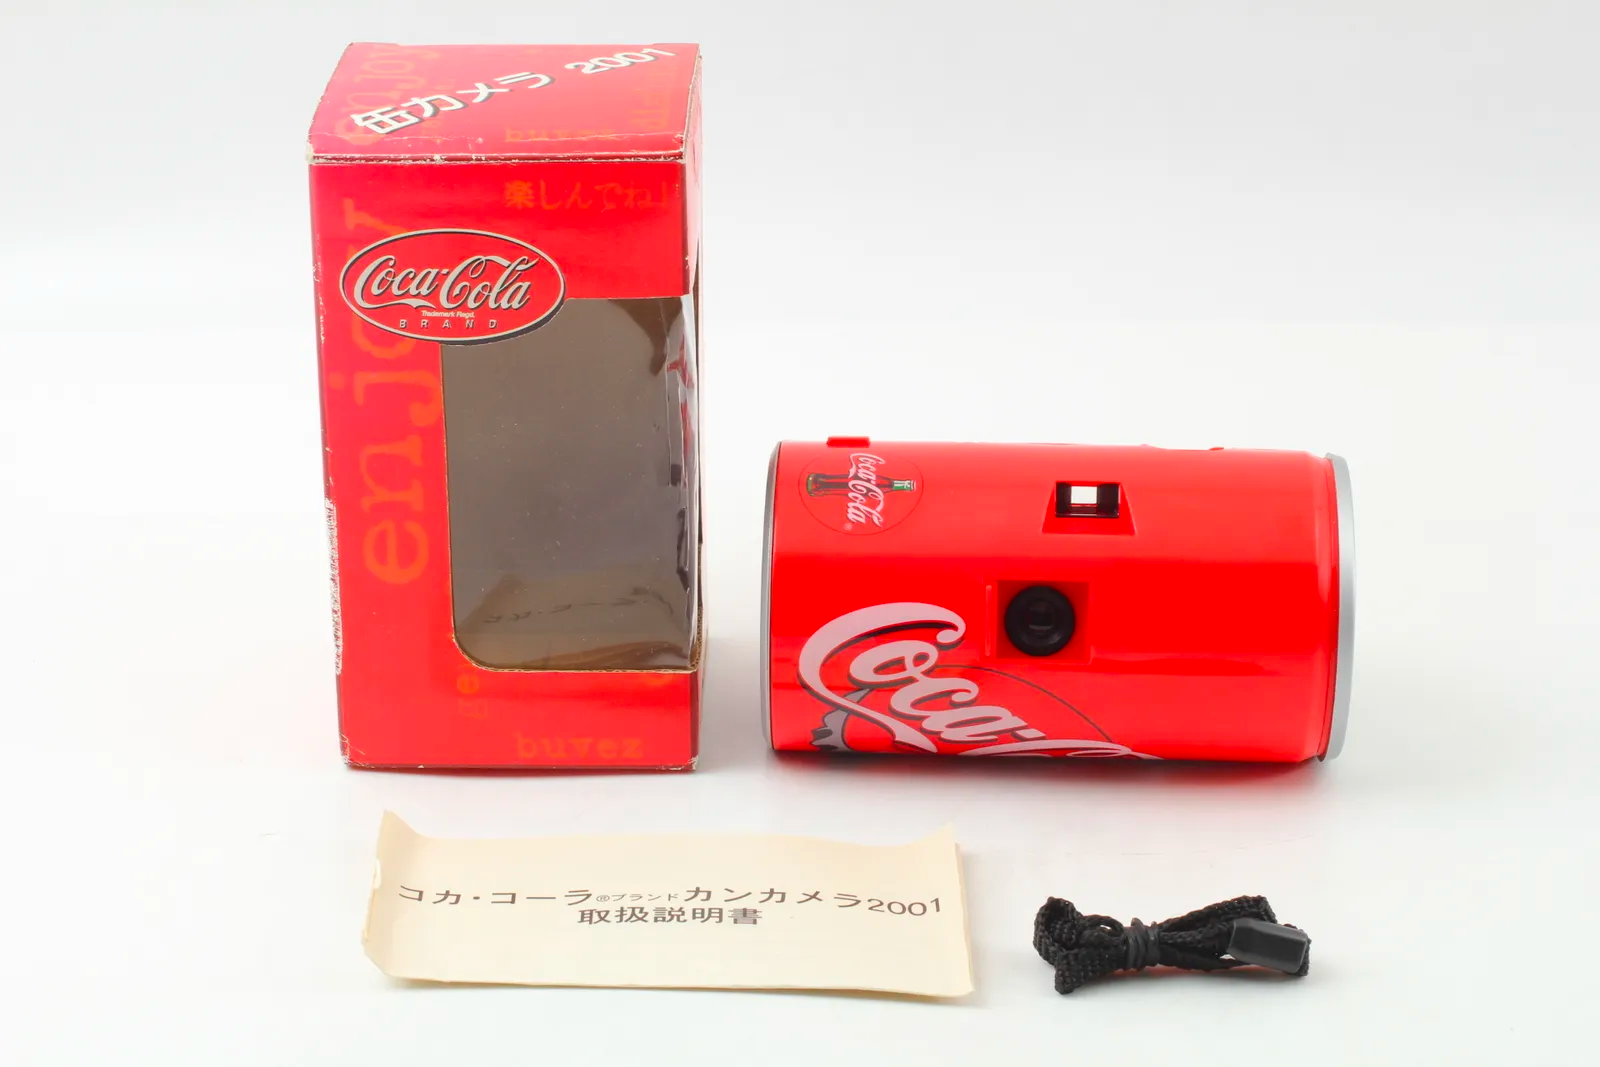 CocaCola film cameras for resale